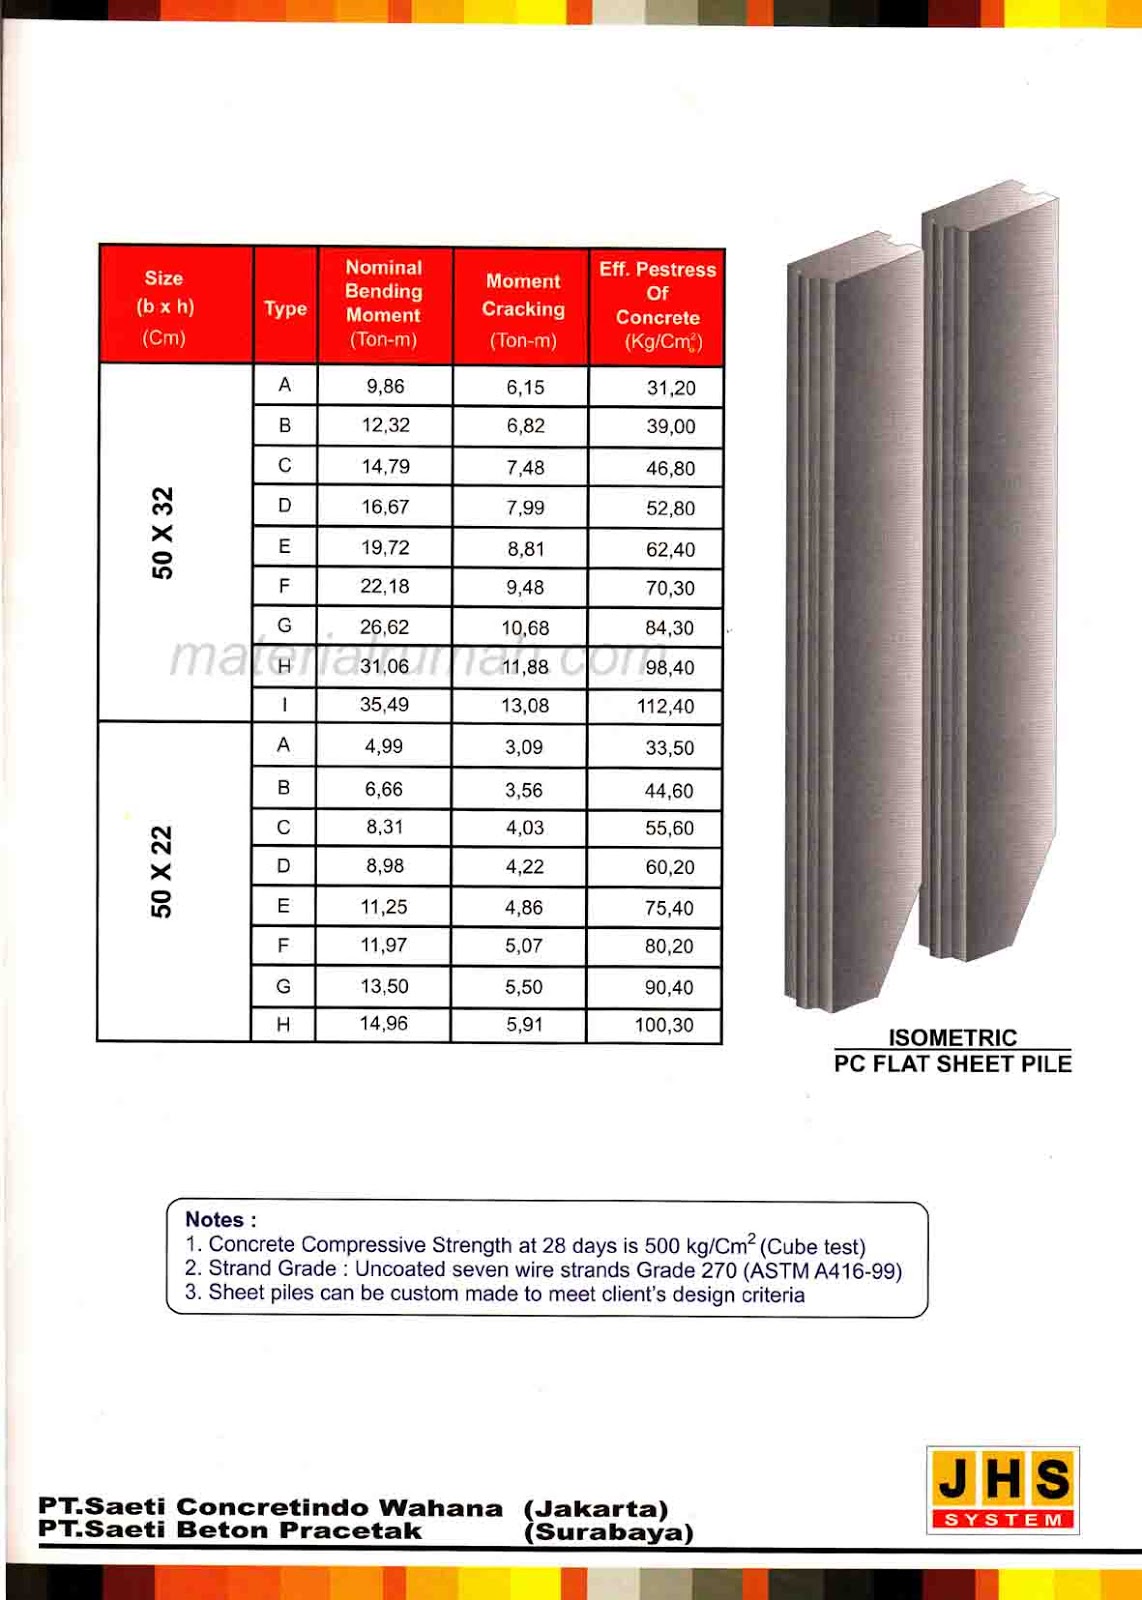 PC Flat Sheet Pile JHS - Rumah Material